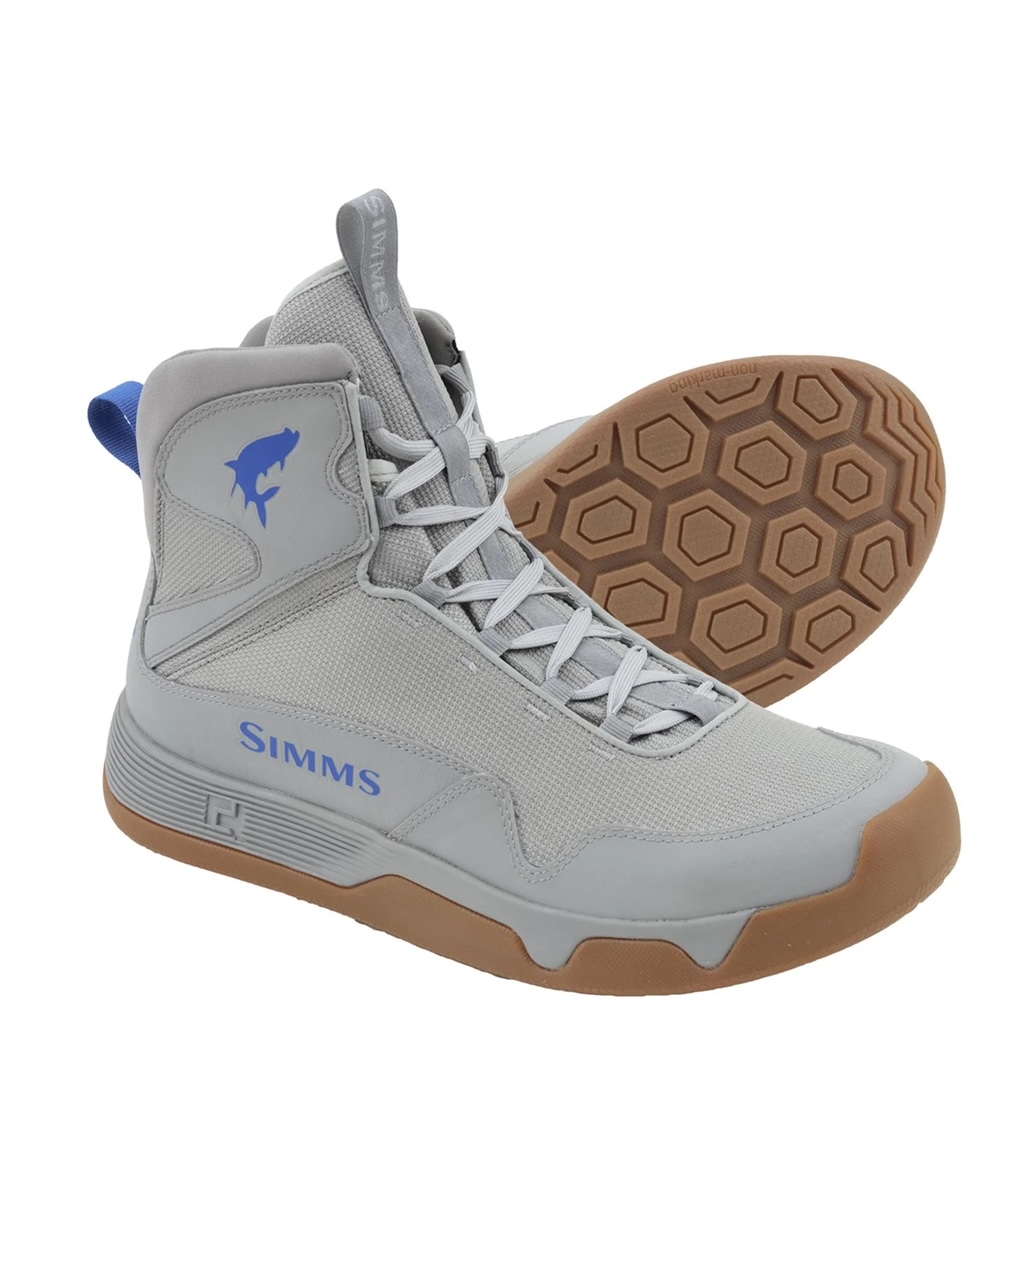 Simms Flats Sneaker Size 13